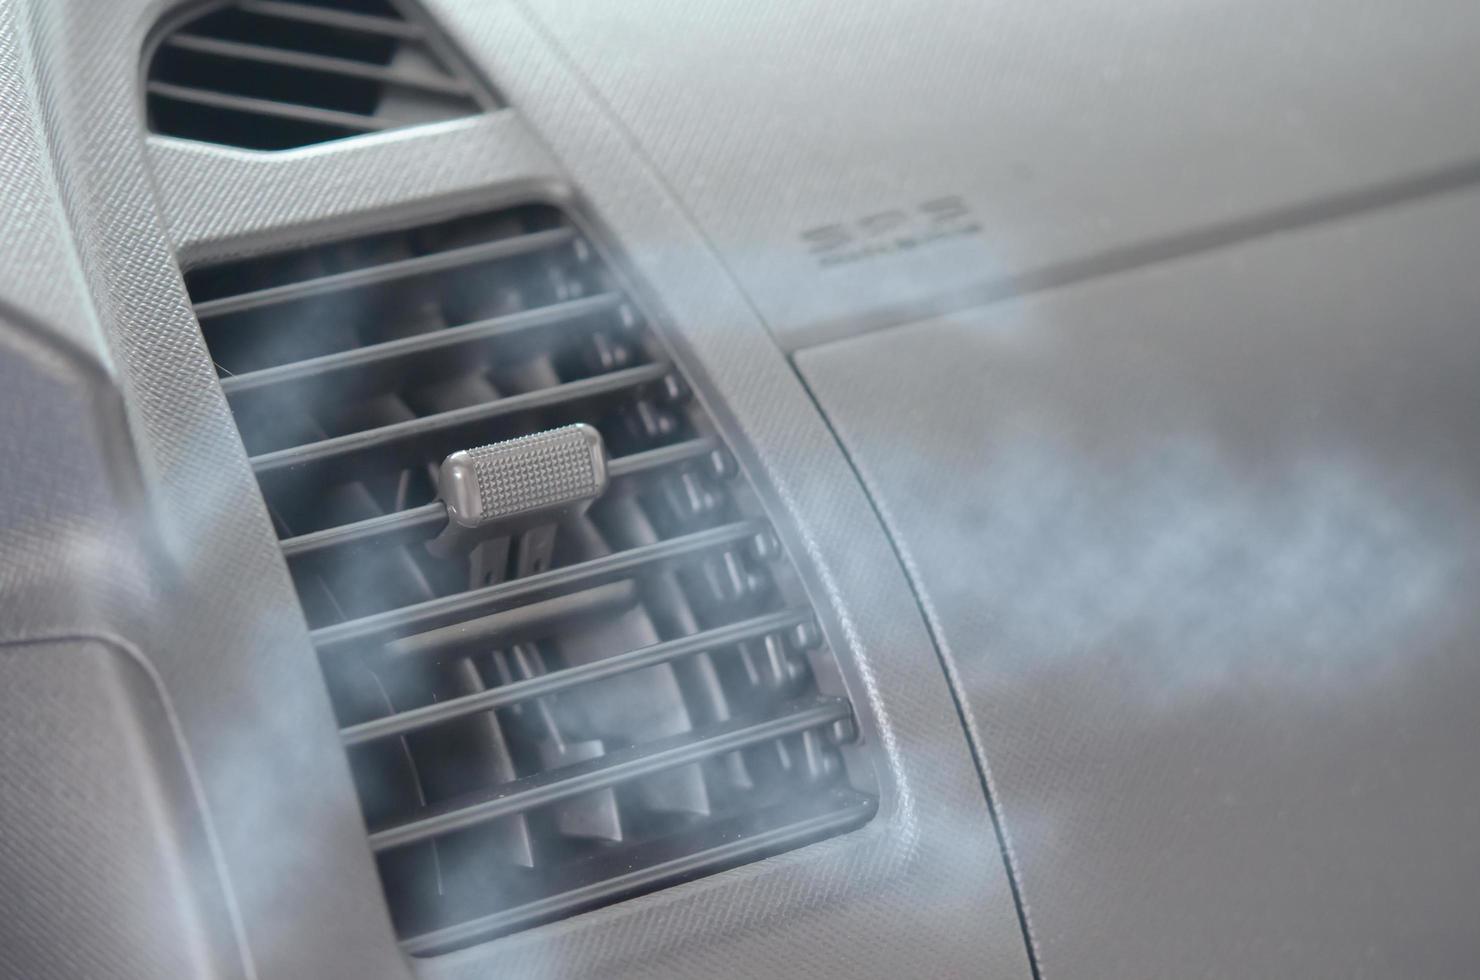 luftkonditionering i bilen foto